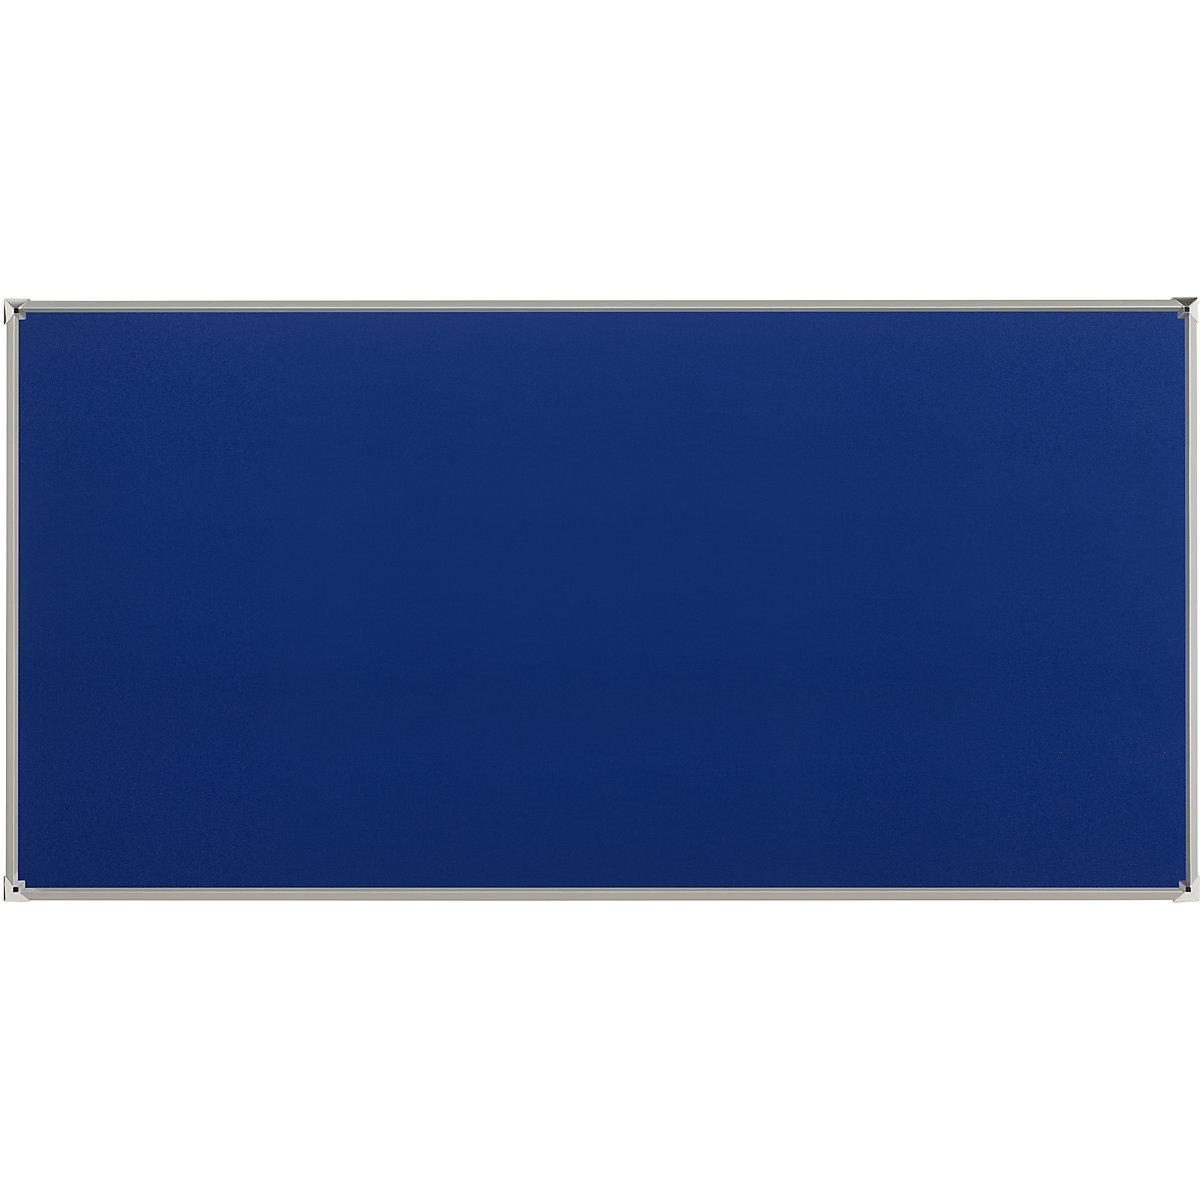 Bacheca con cornice in alluminio – eurokraft pro, tessuto, blu, largh. x alt. 2400 x 1200 mm-5